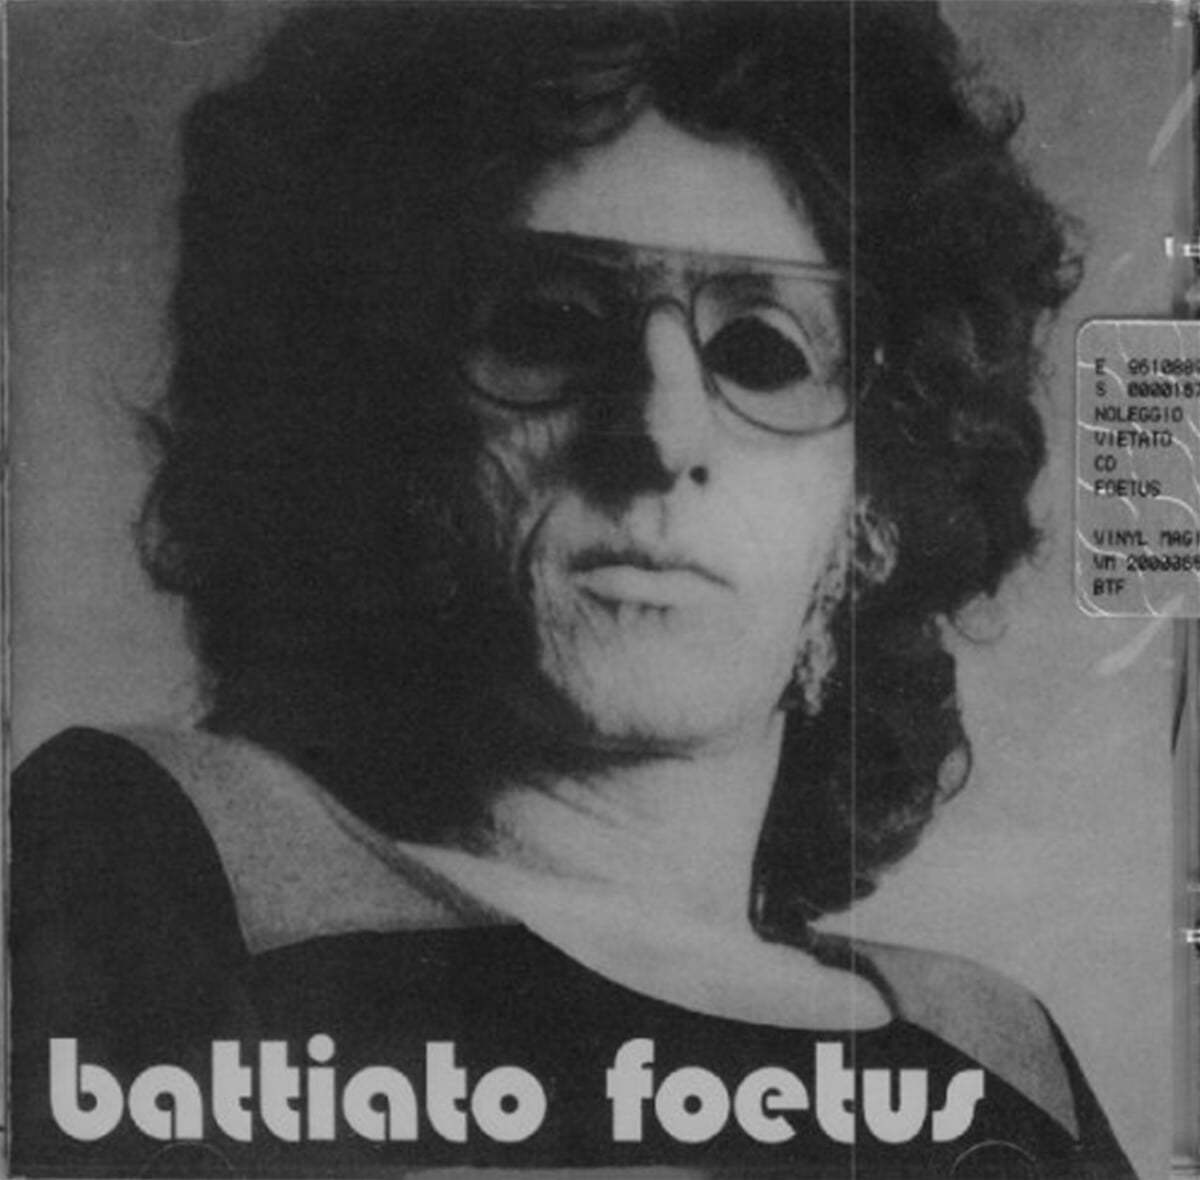 Franco Battiato (프랑코 바티아토) - Foetus [옐로우 컬러 LP] 